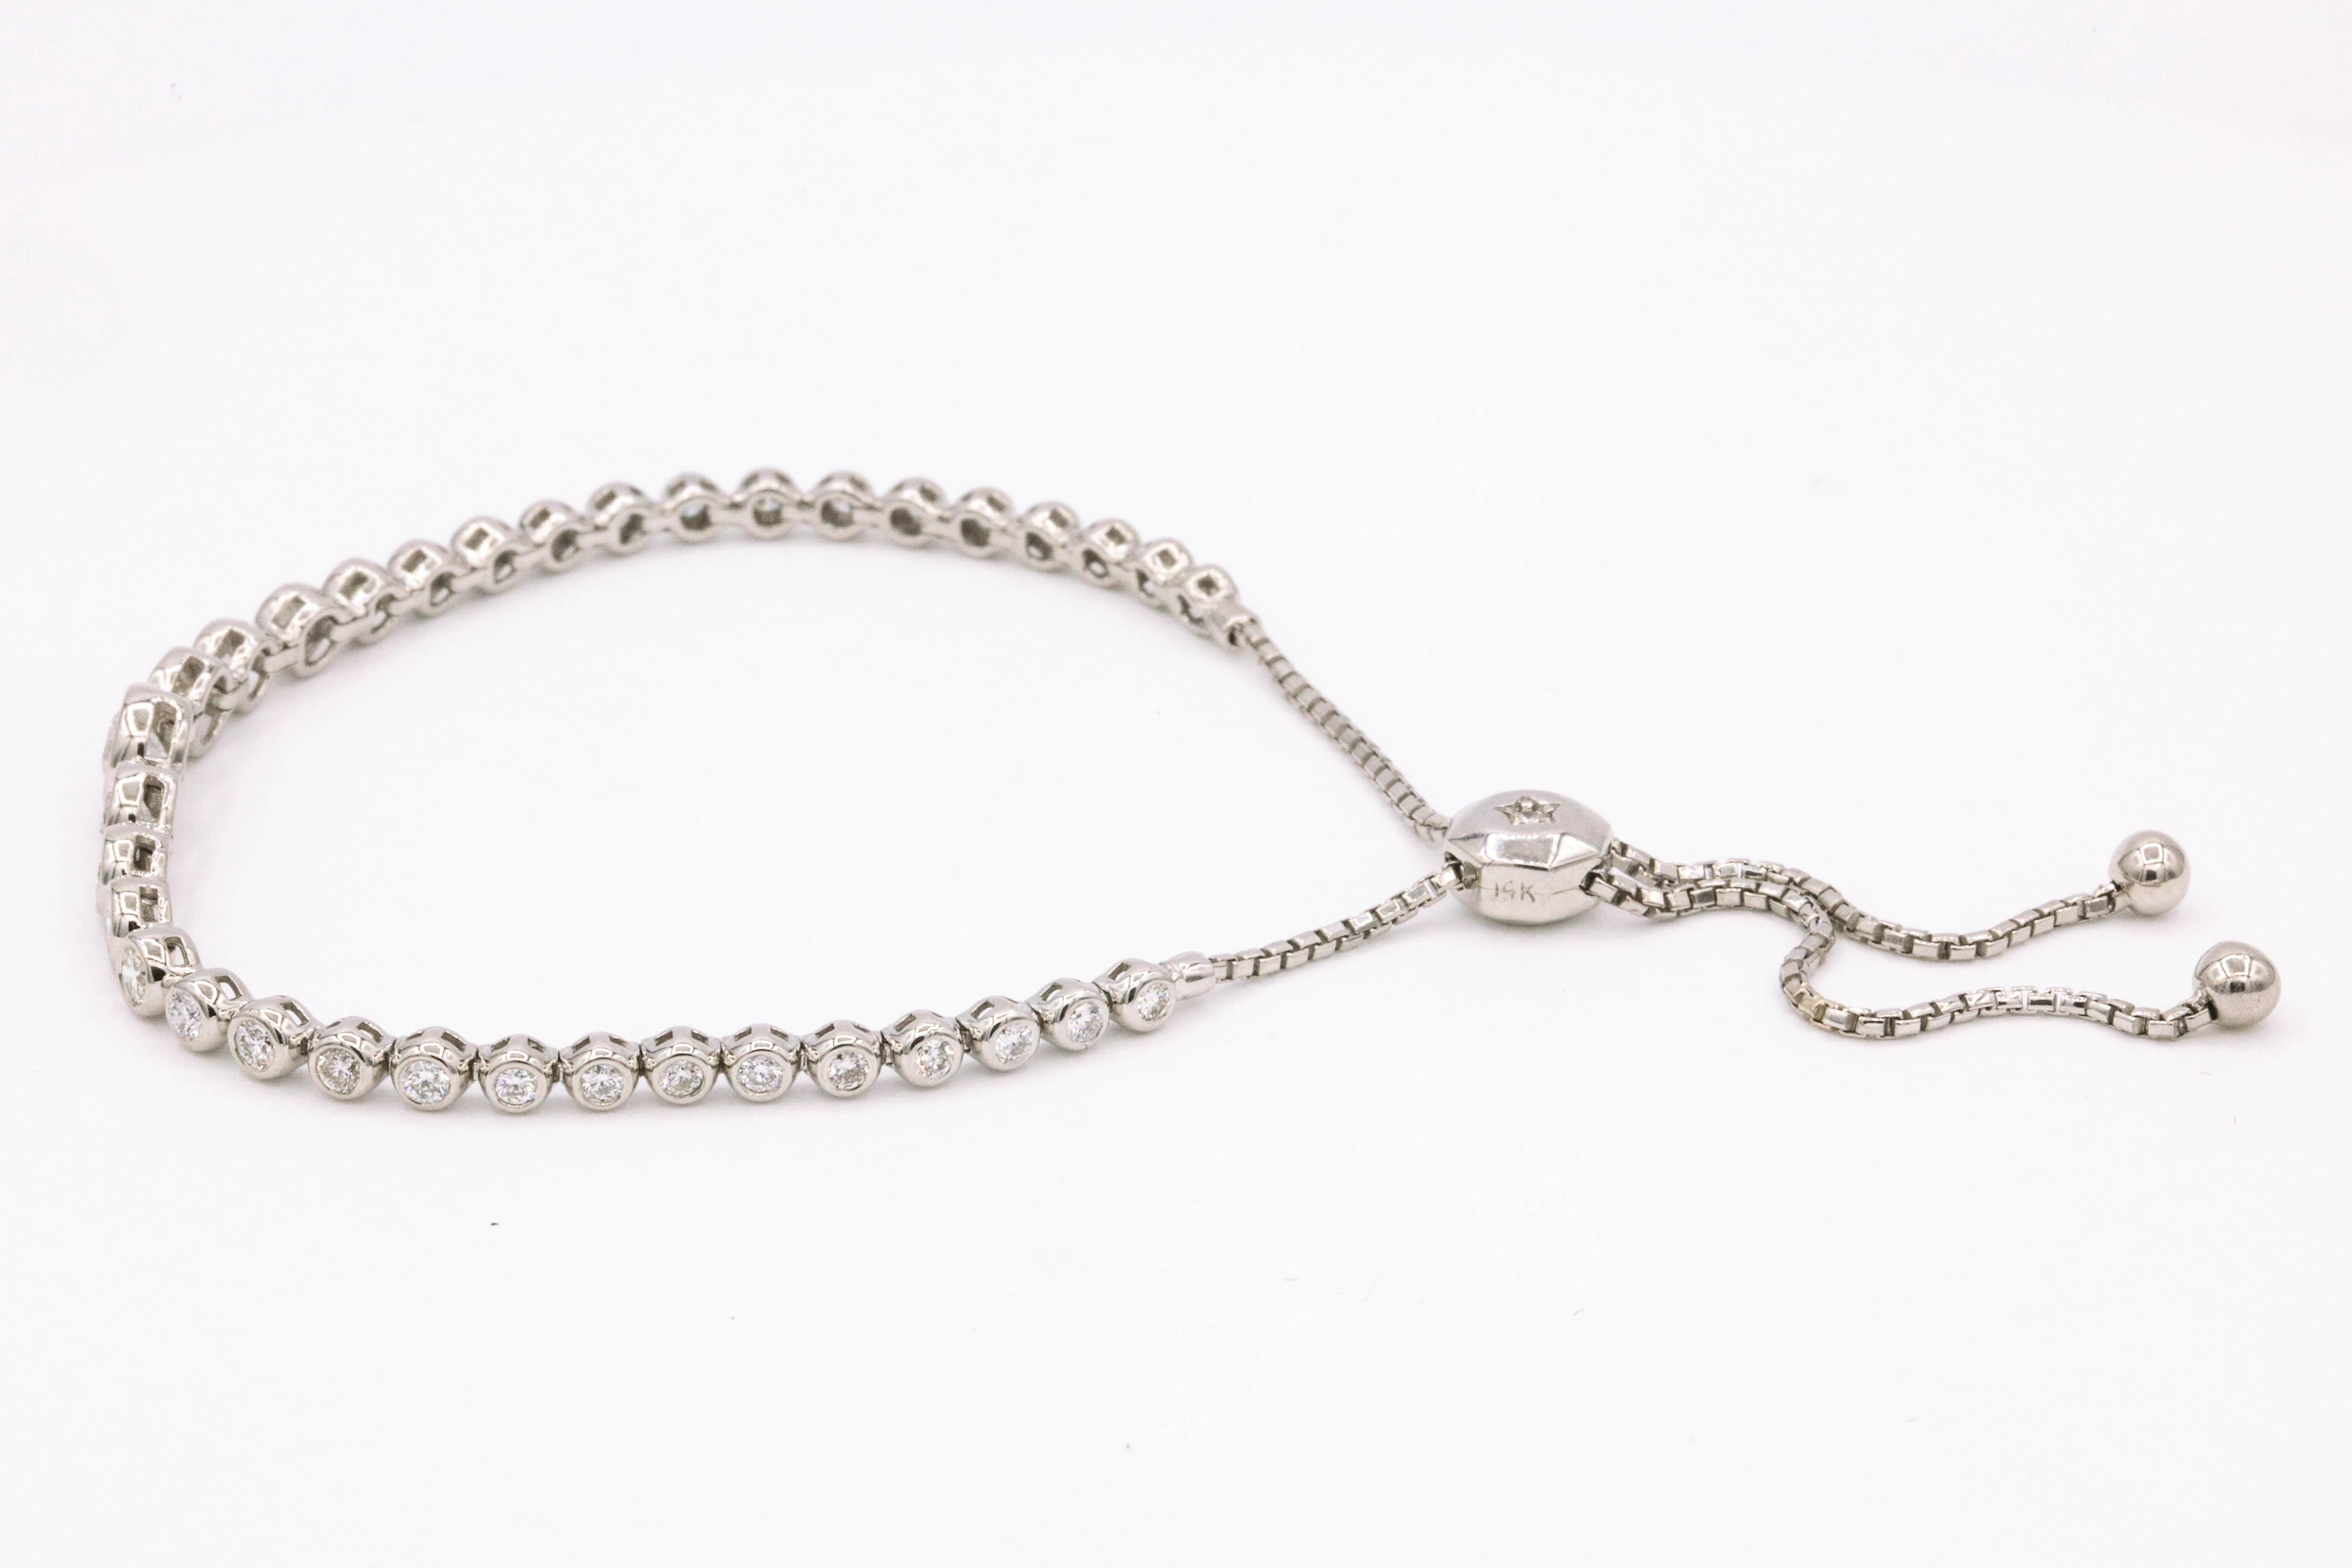 Diamond bezel bracelet featuring 2.52 carats diamonds, in 14k white gold. 
Color G-H
Clarity SI 